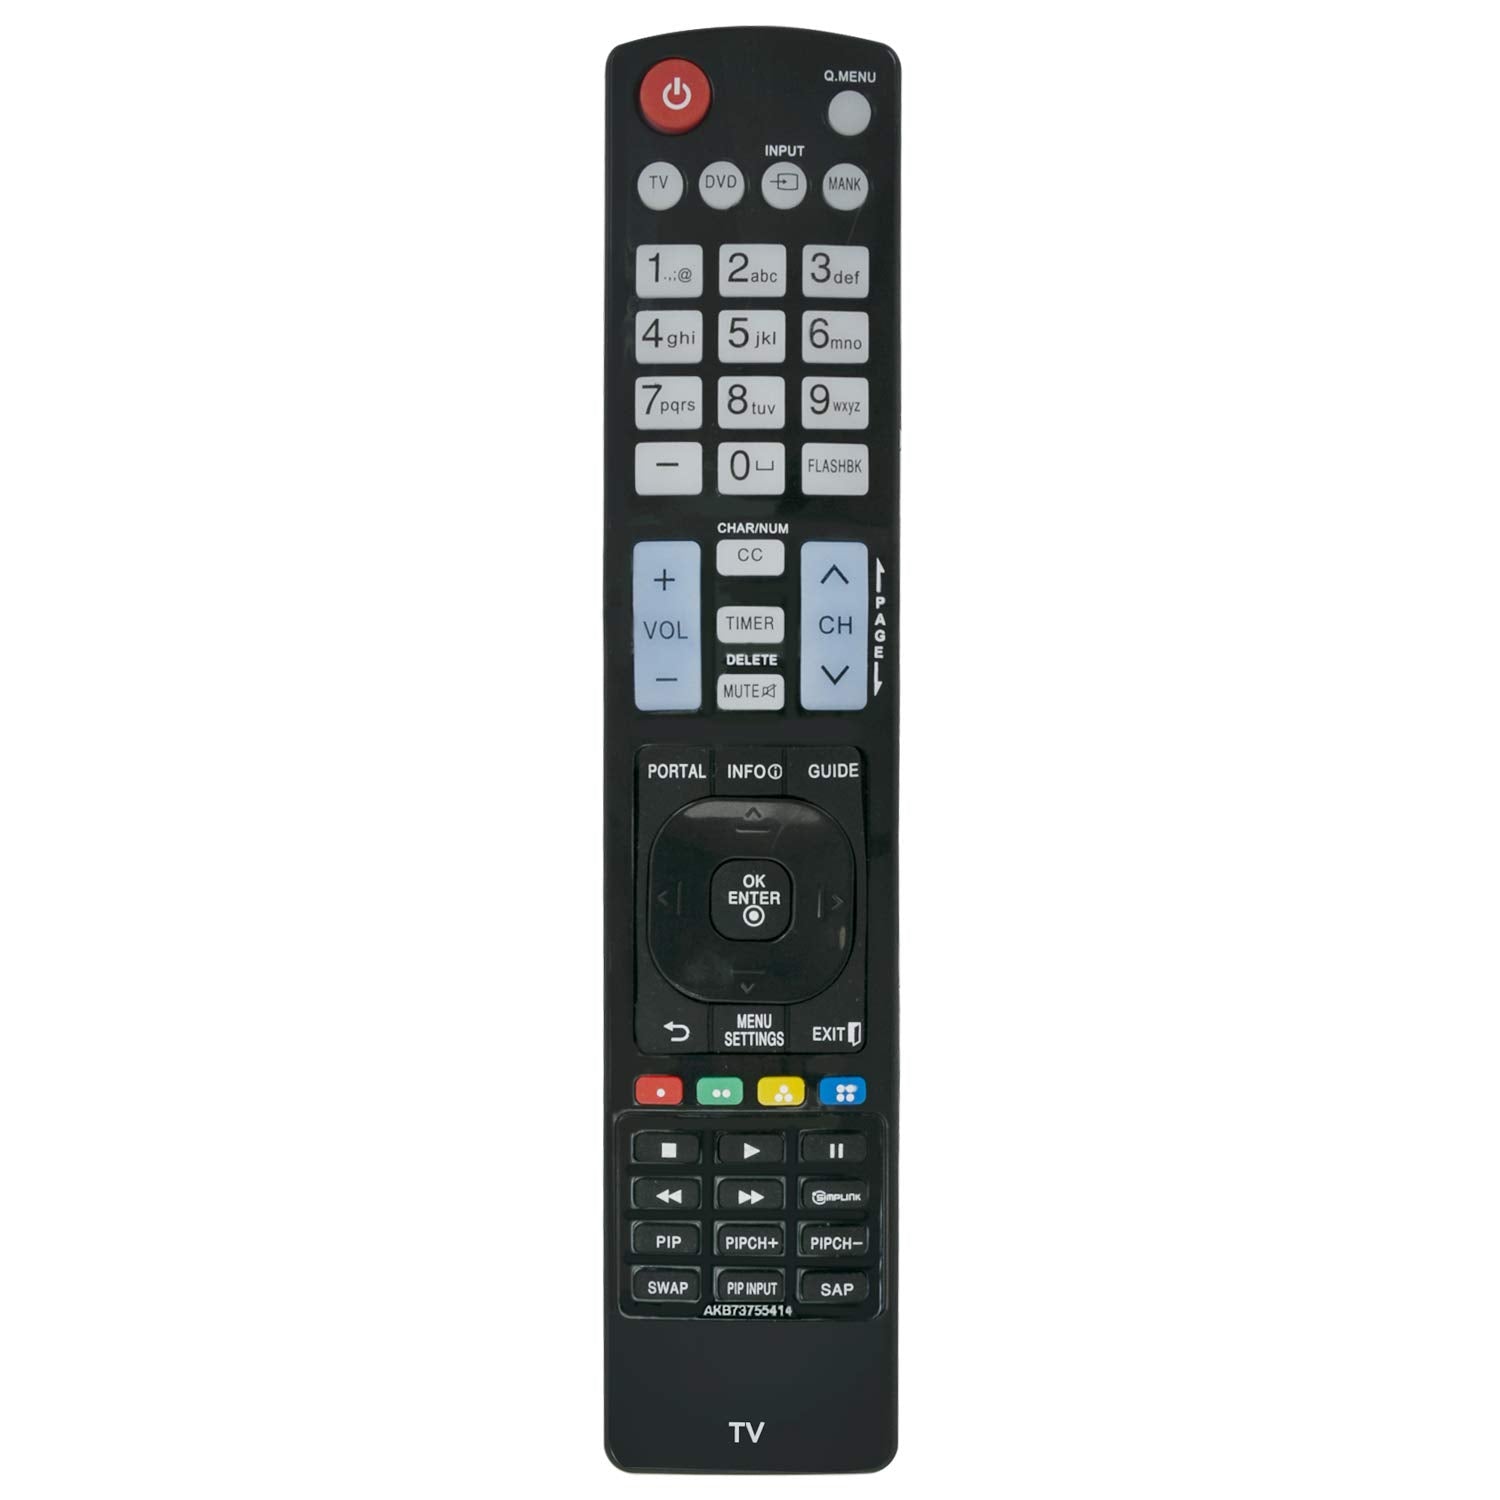 LG AKB73755414 TV Remote Control